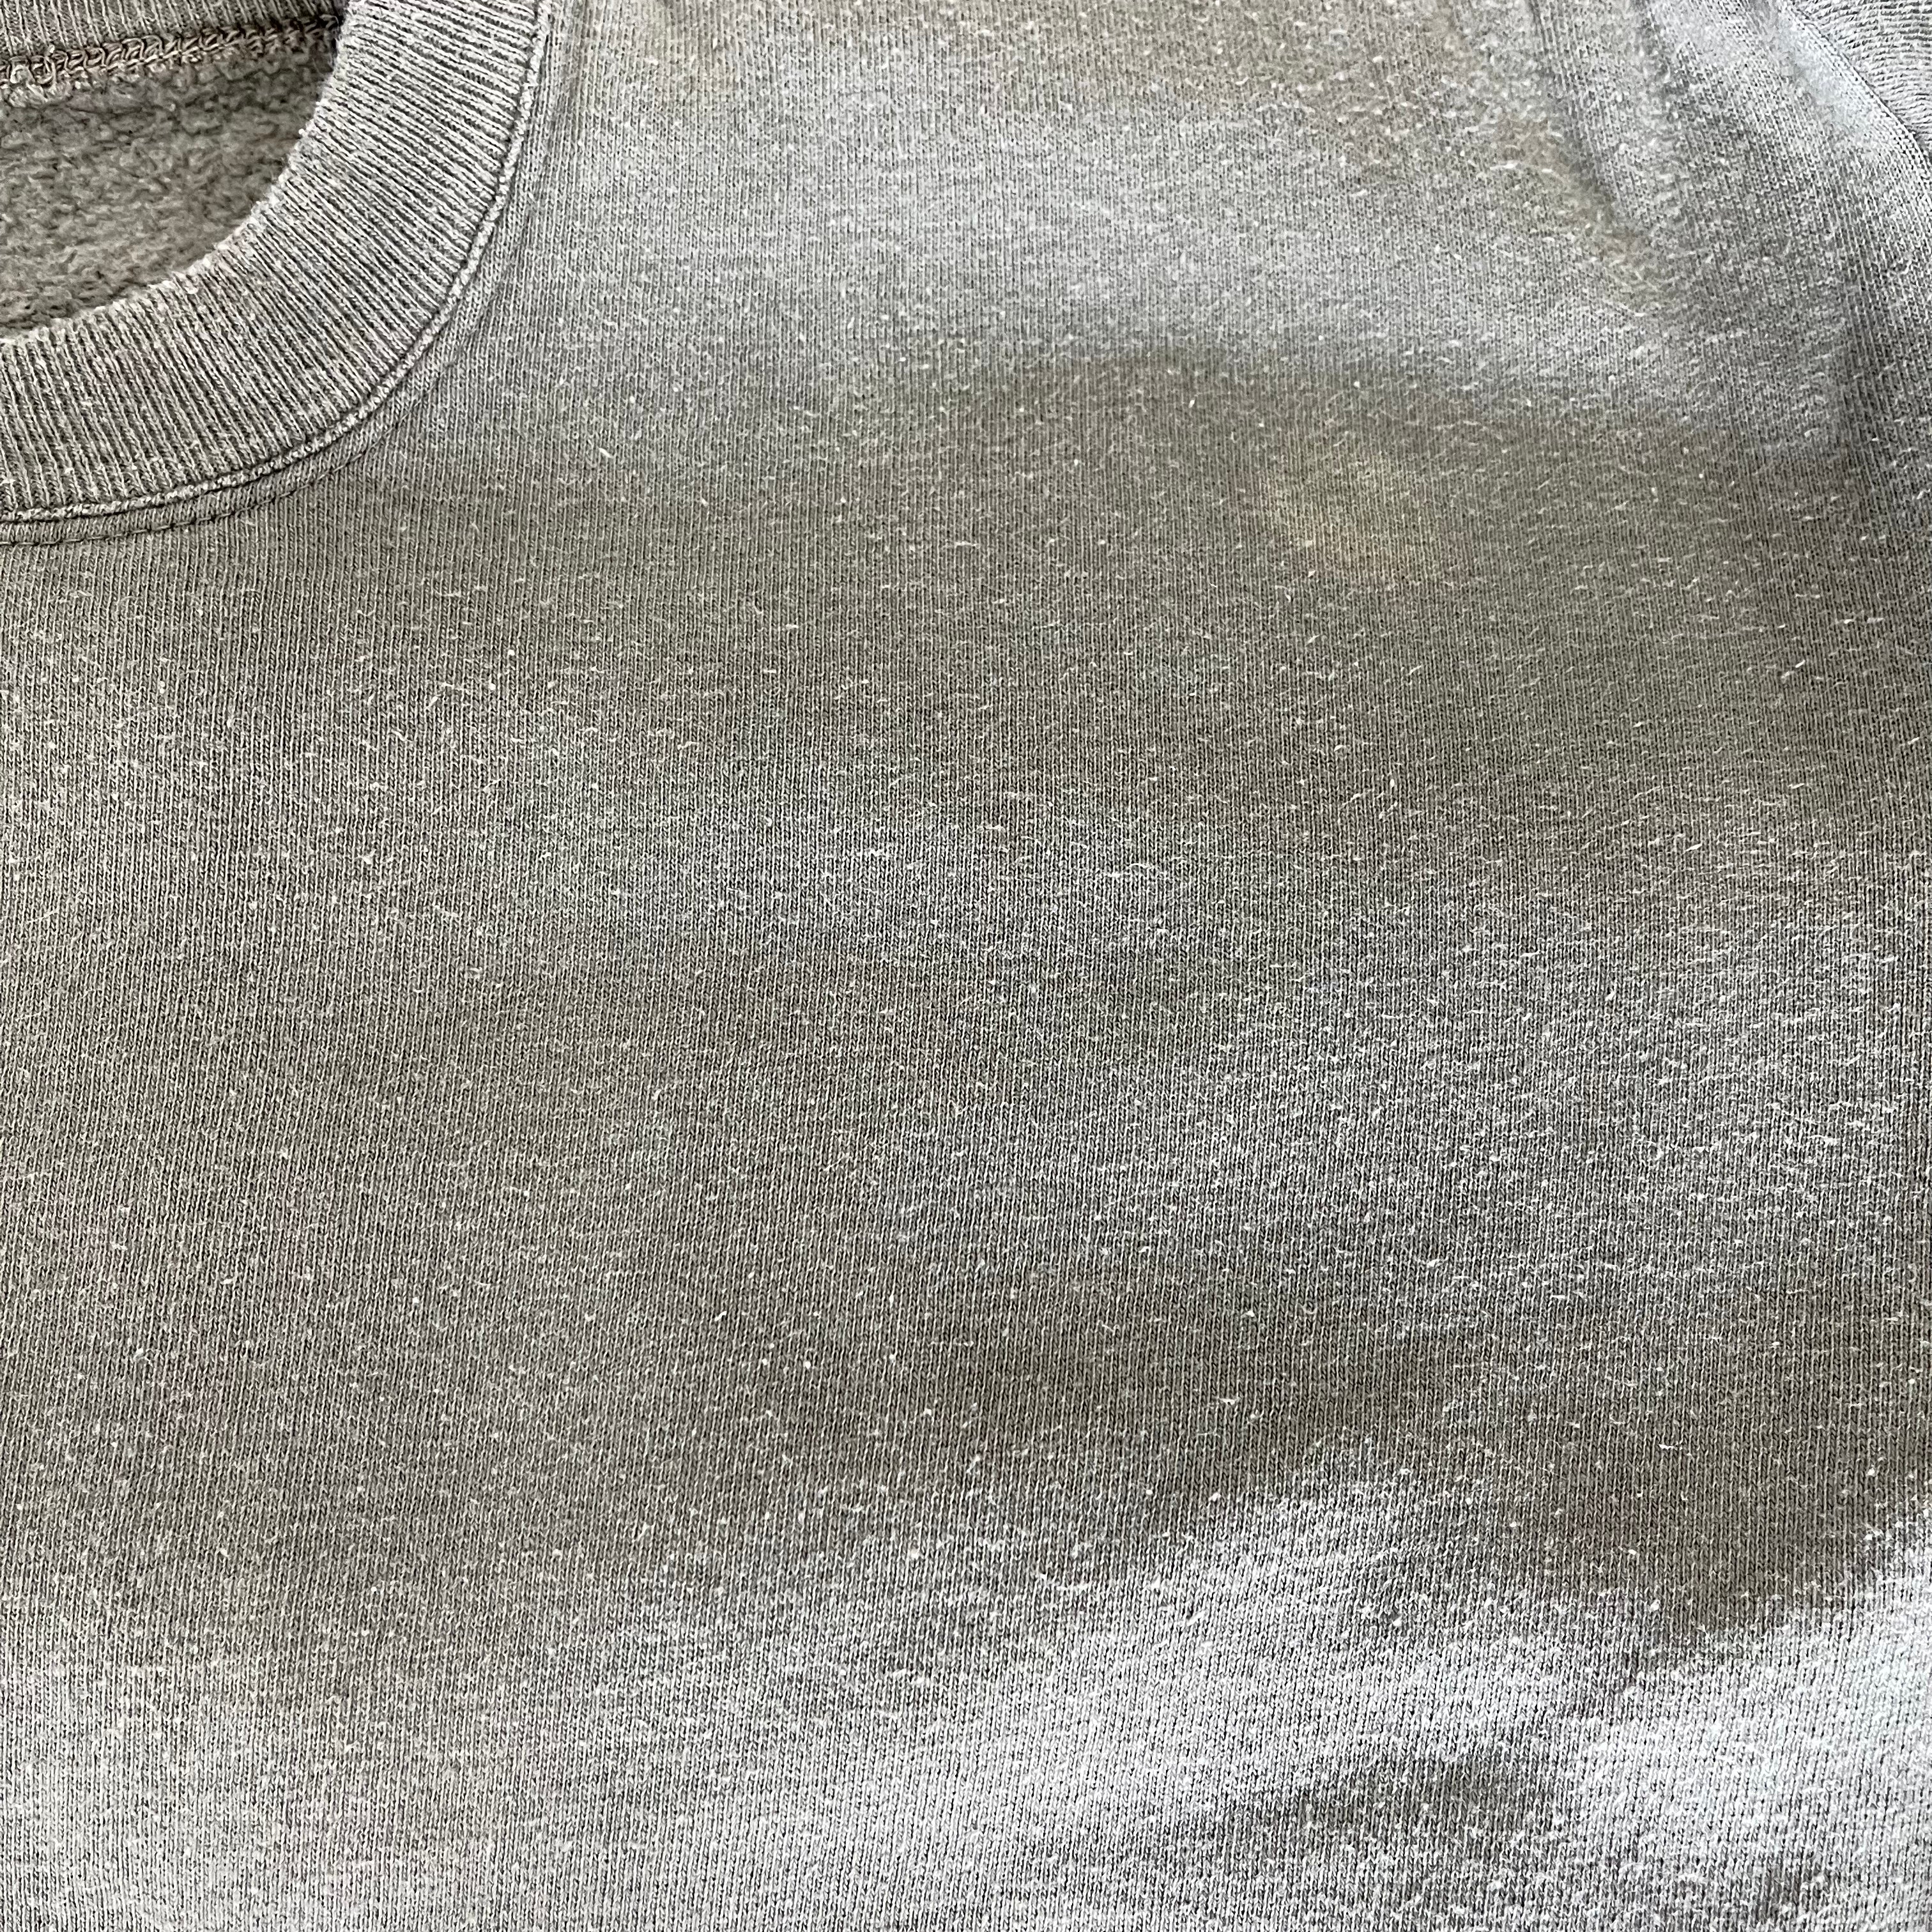 Brouillon de sweat-shirt vierge